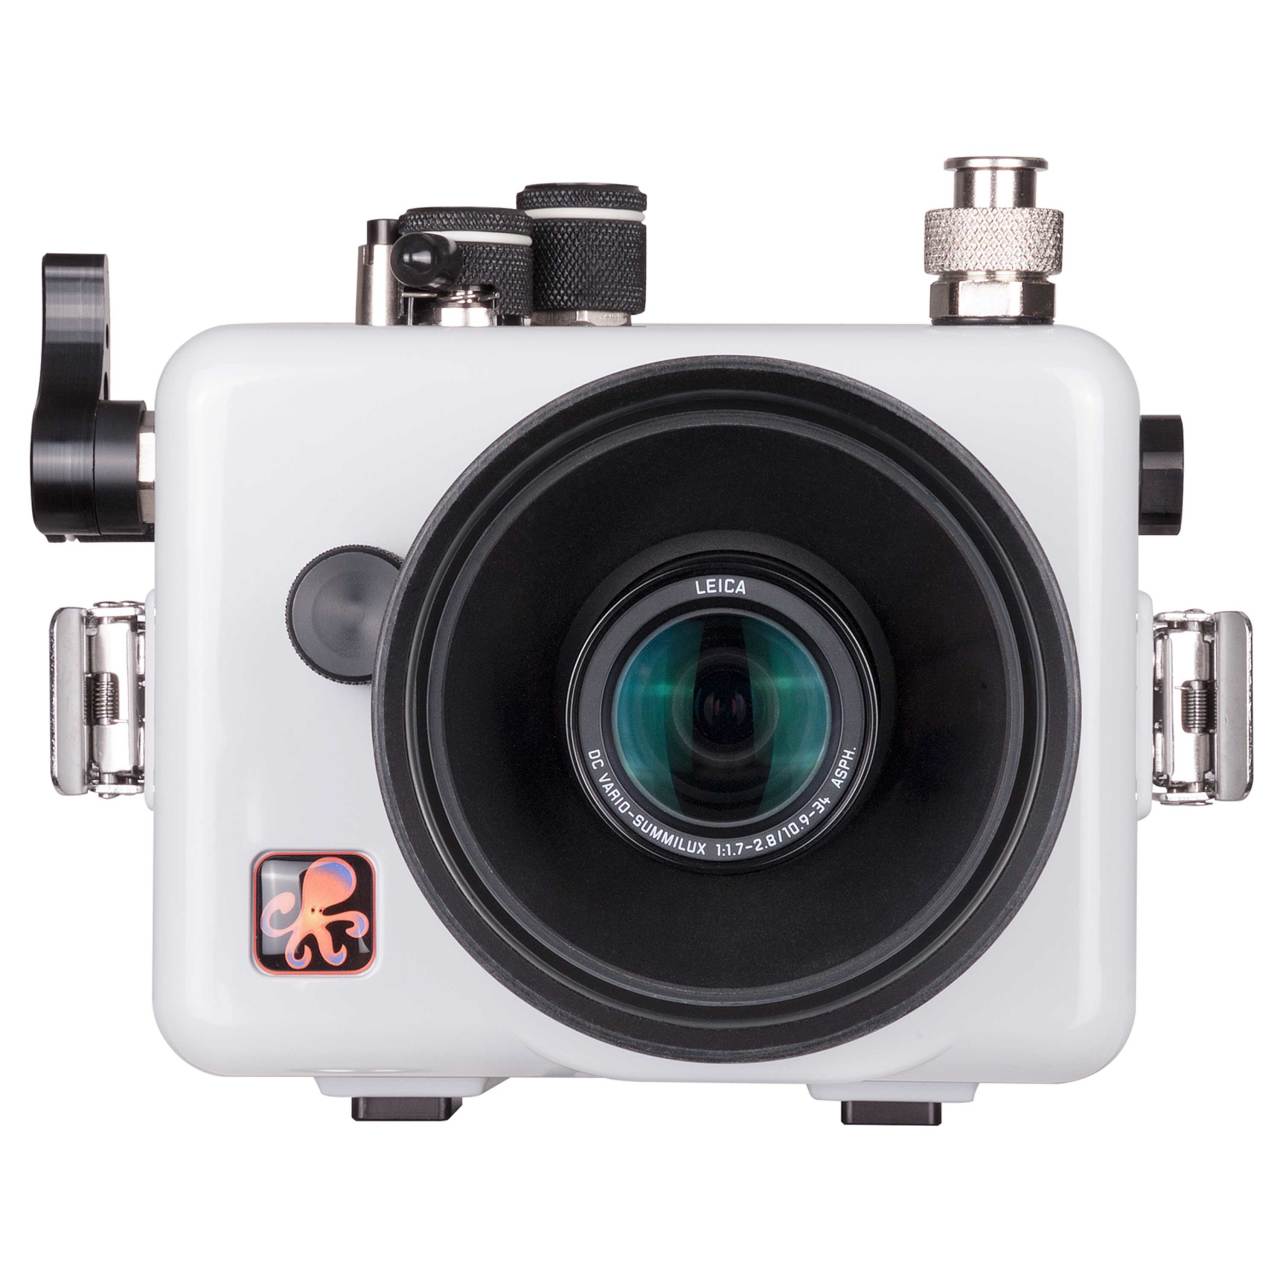 Ikelite Kabin (Panasonic Lumix LX100 kompakt kamera için)